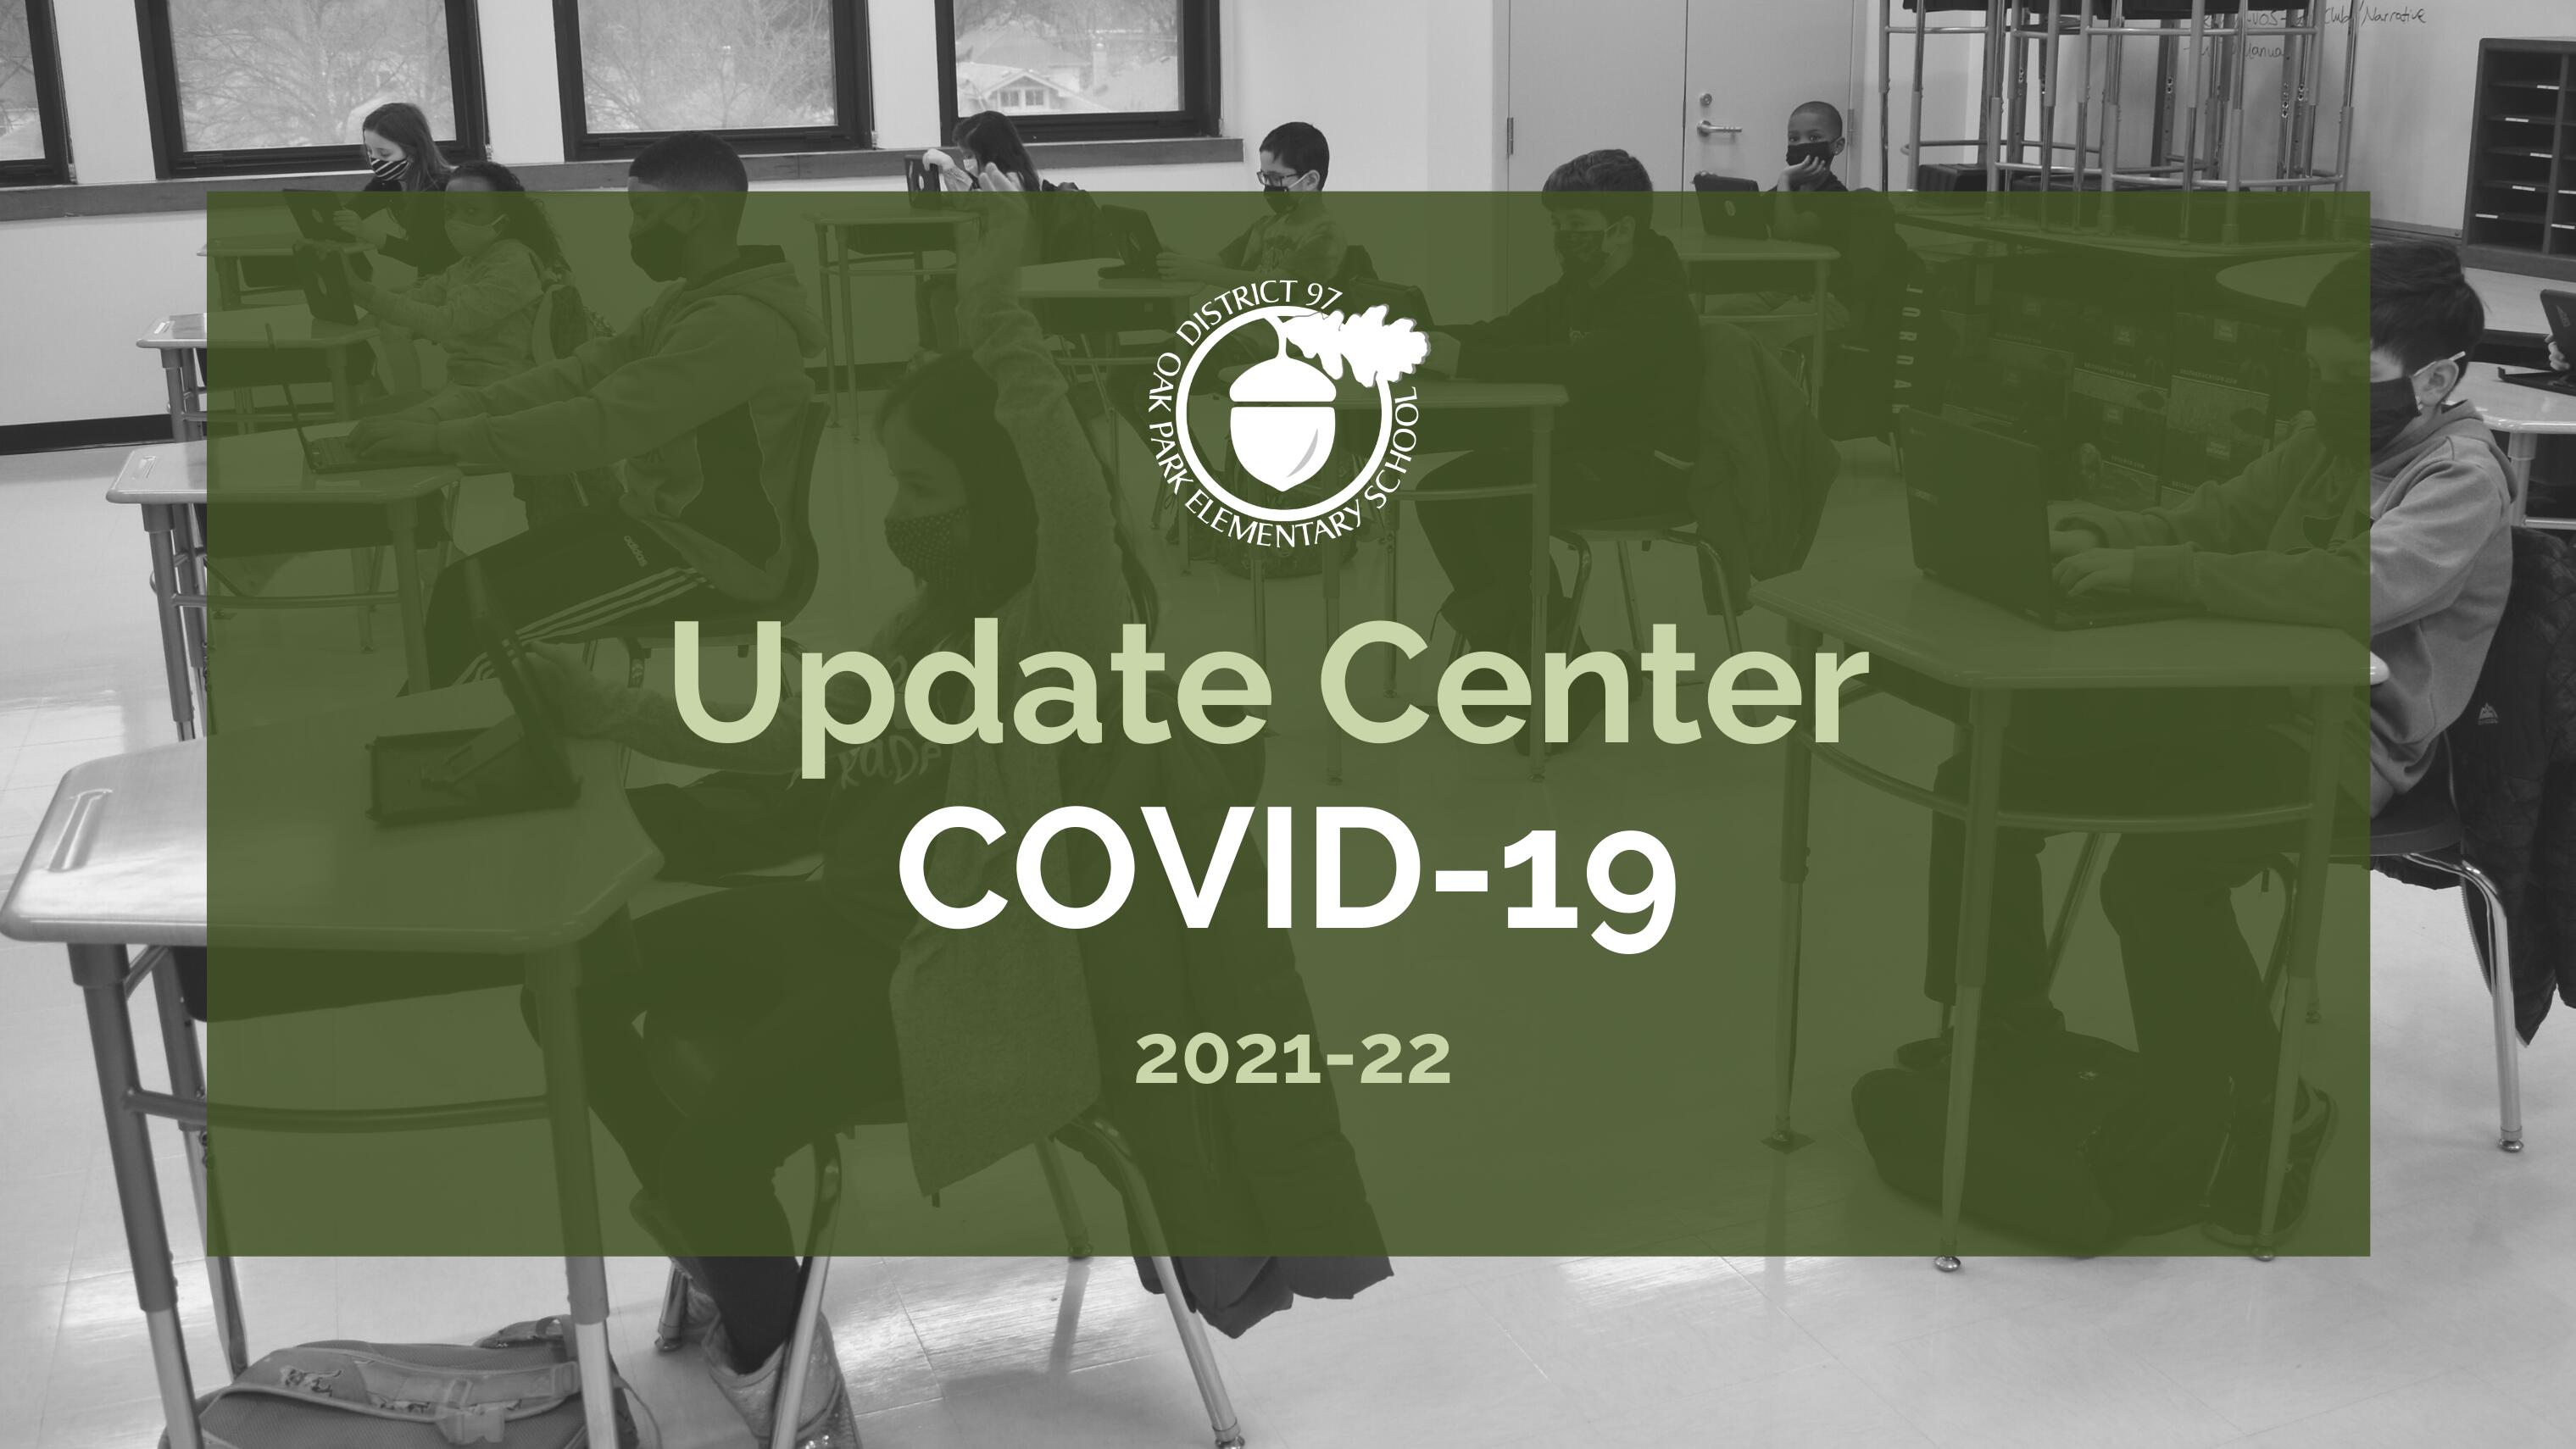 COVID-19 Update Center 2021-2022 banner